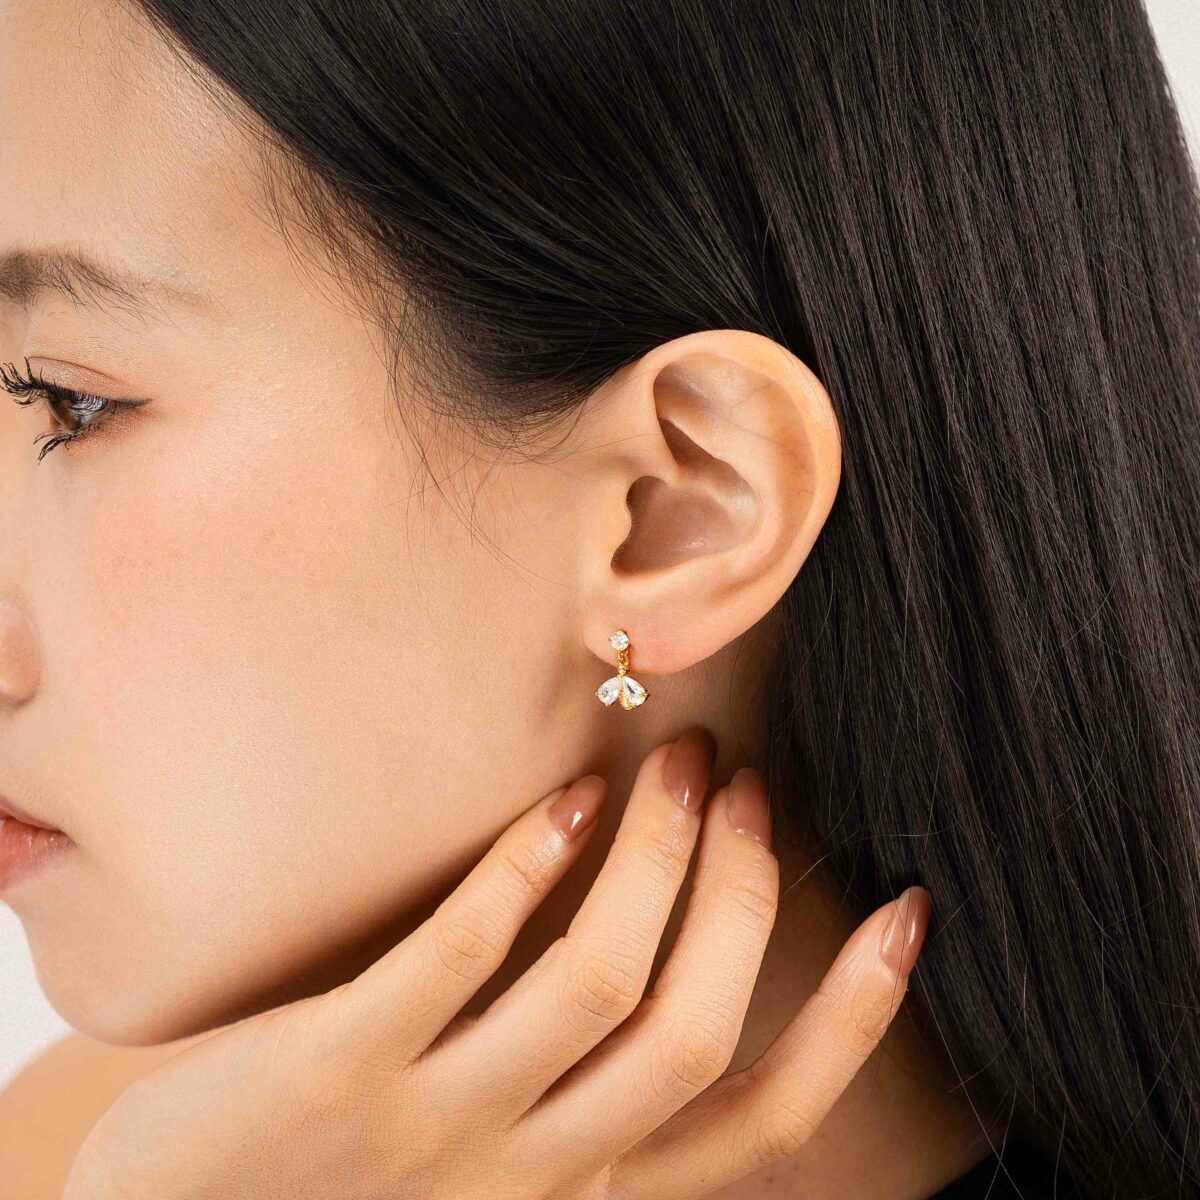 https://m.clubbella.co/product/buzz-earrings-24k-gold-plated/ BUZZ GOLD EARRINGS (3)